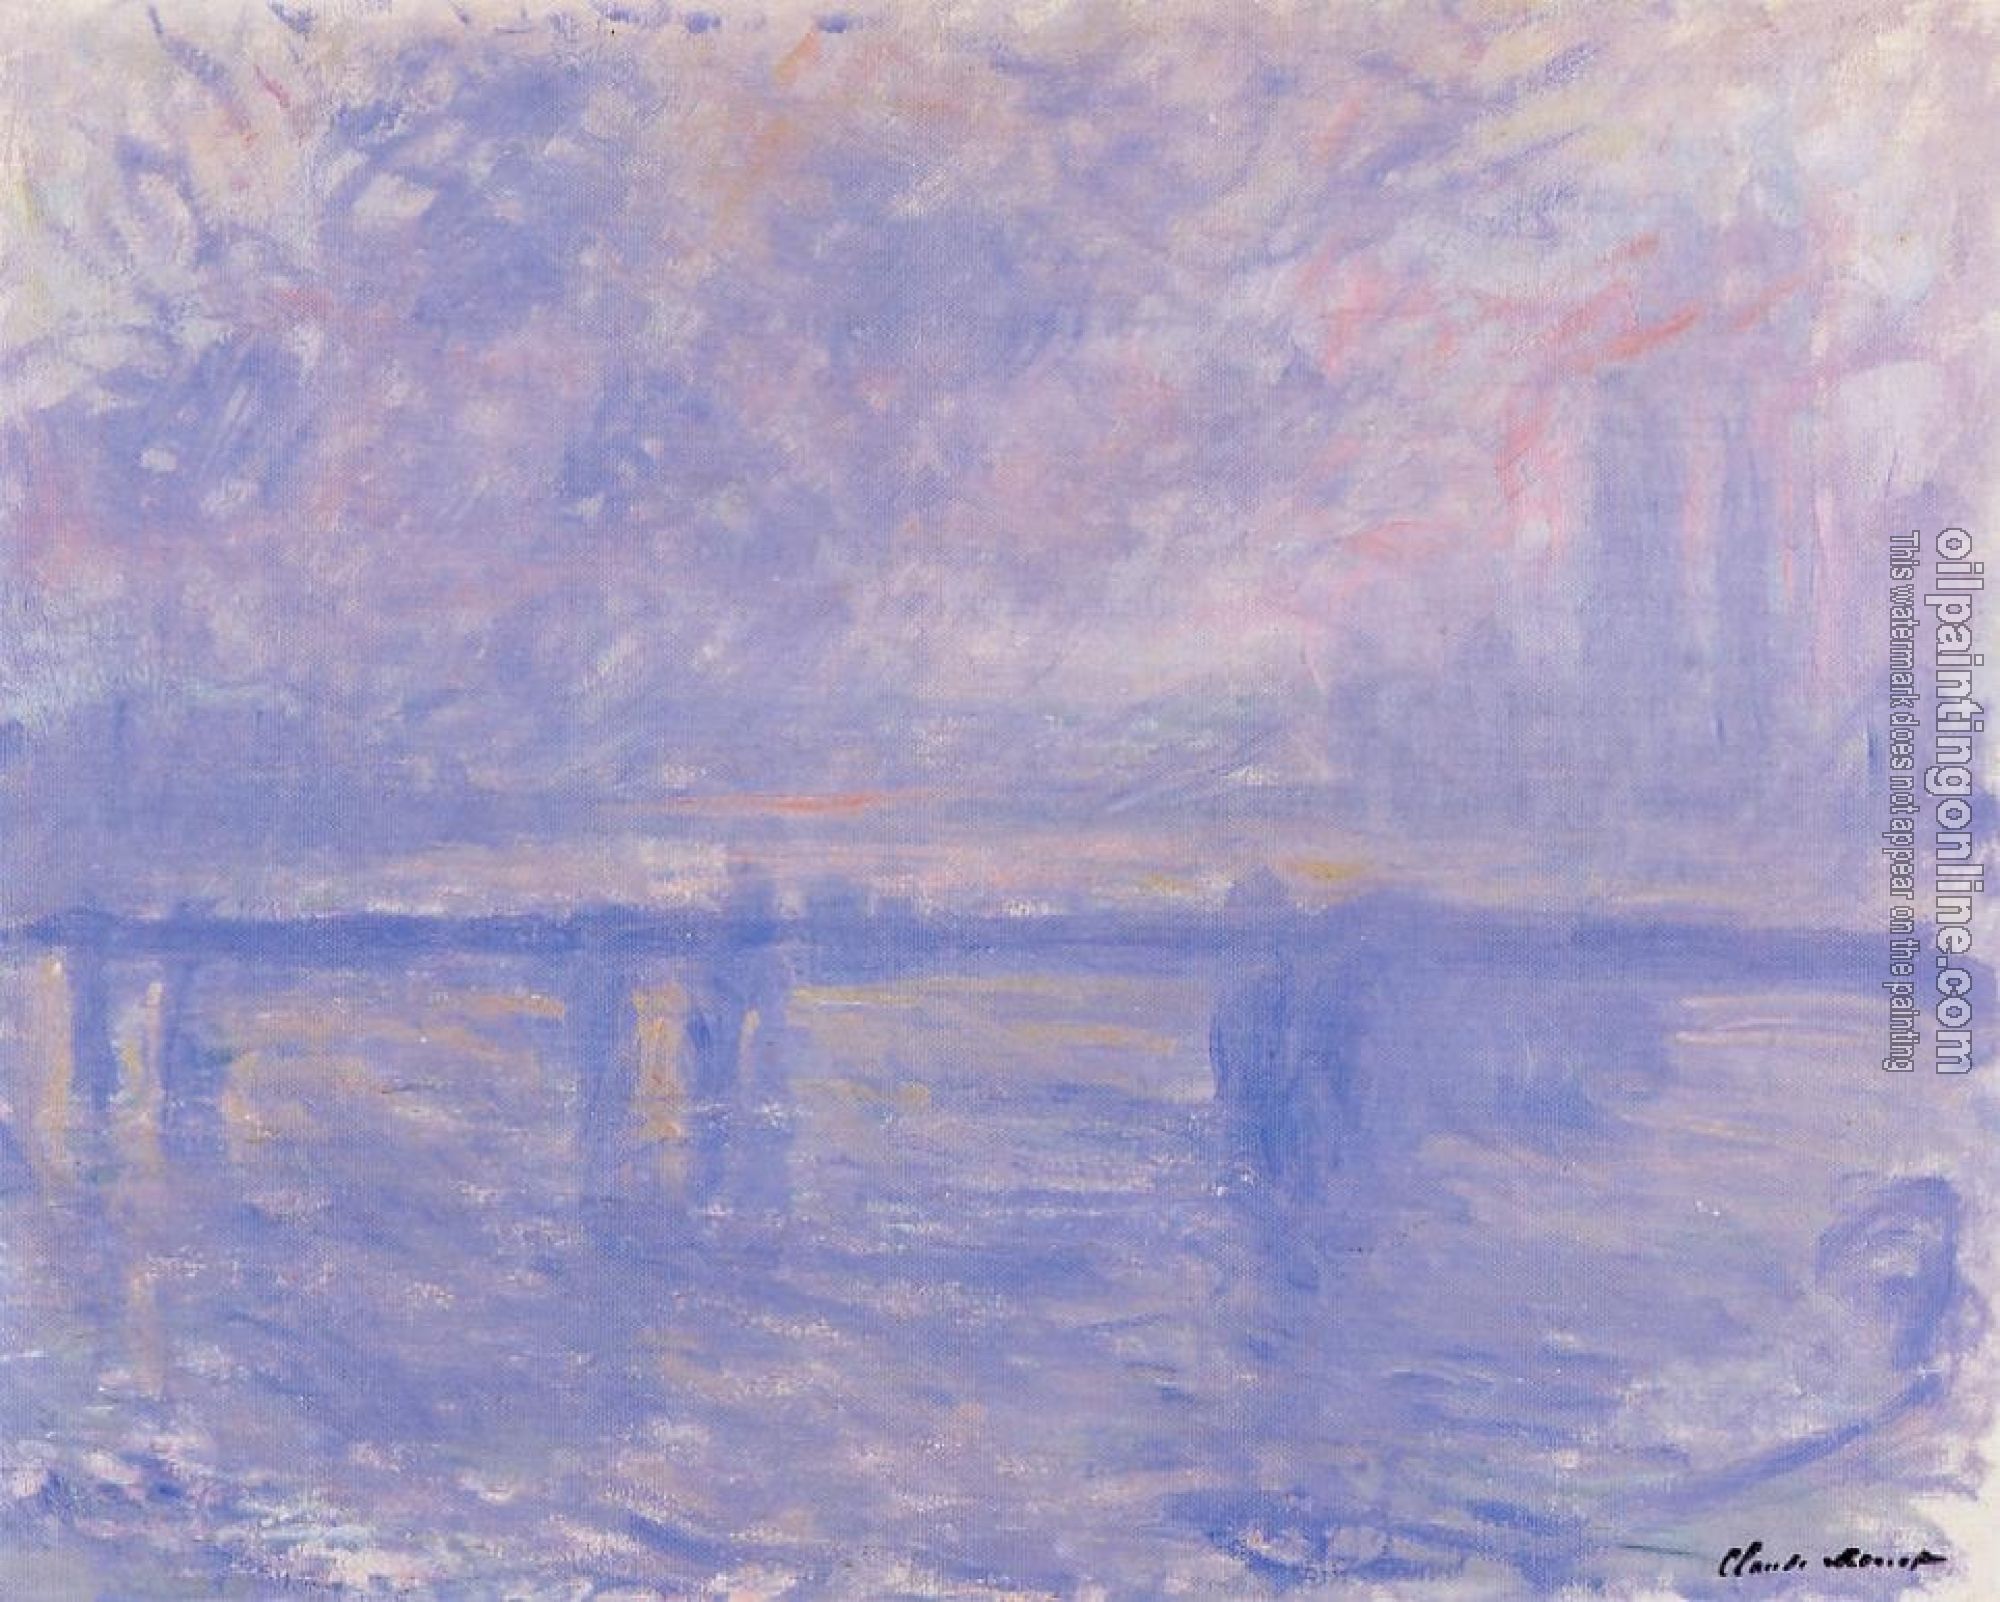 Monet, Claude Oscar - Charing Cross Bridge